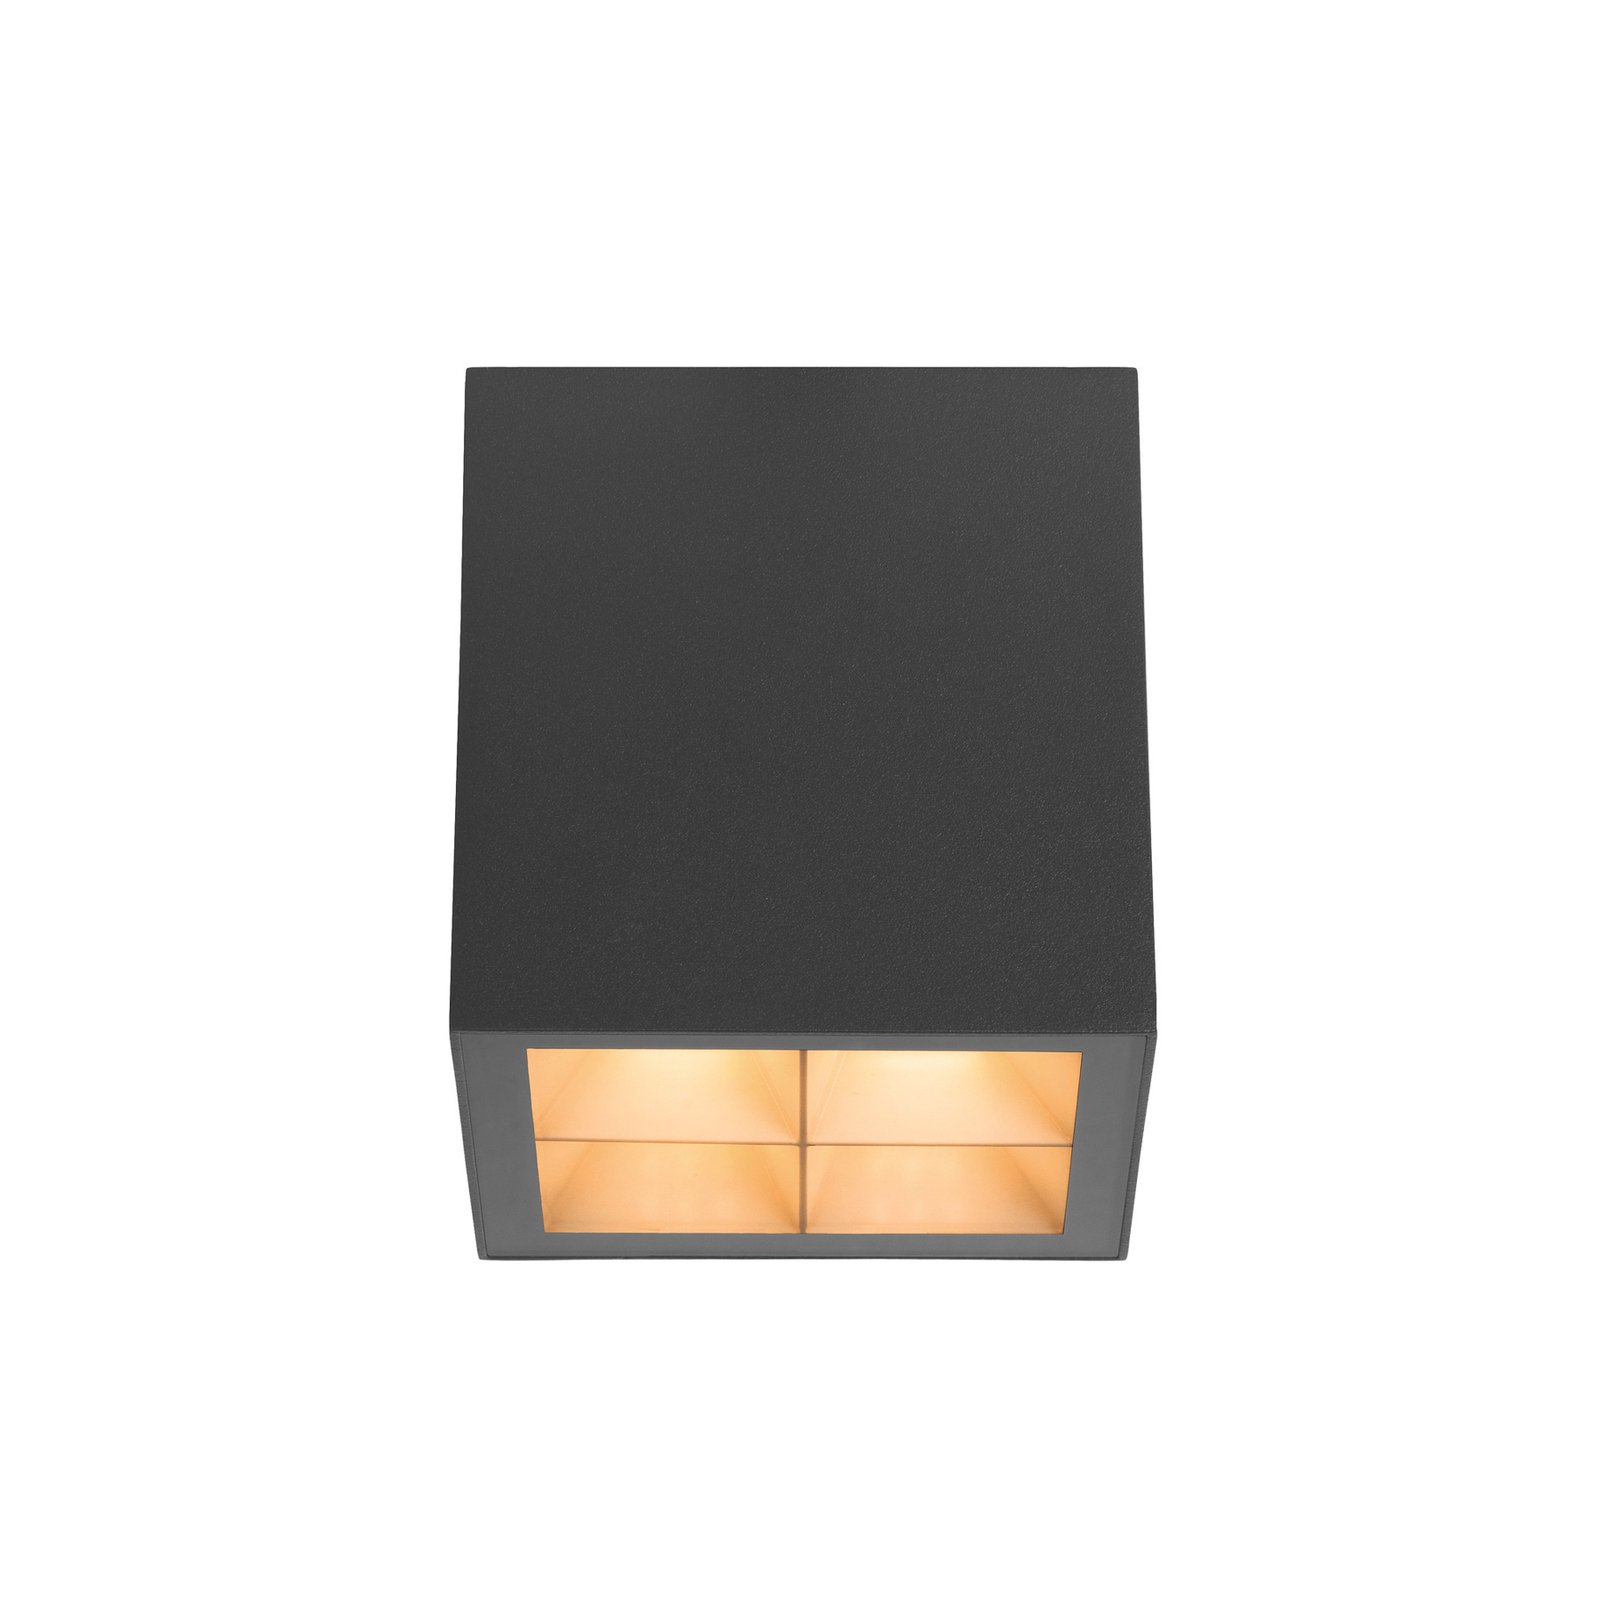 SLV LED plafondlamp S-Cube, antraciet, aluminium, lengte 9,5 cm